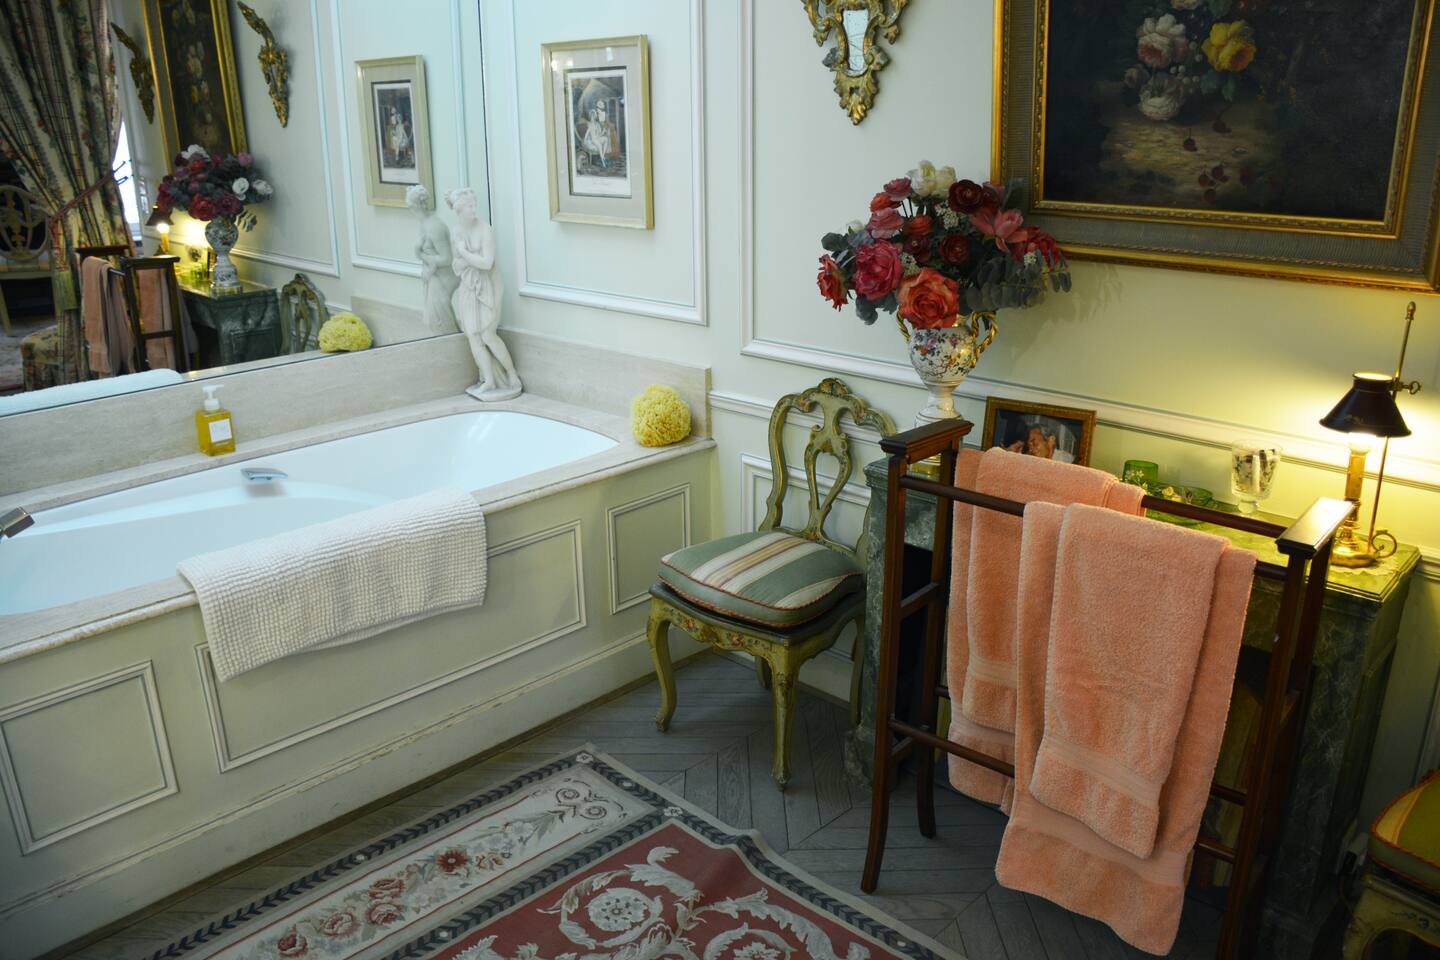 En suite bathroom with a glorious soaking tub